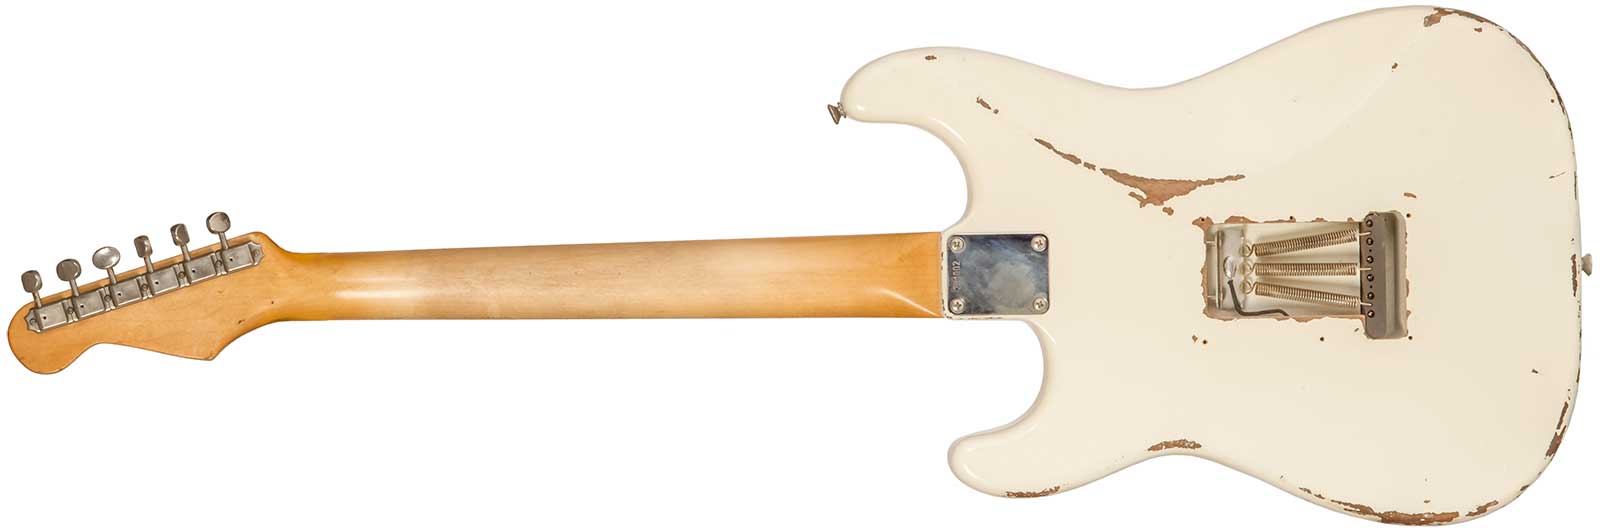 Rebelrelic S-series 1962 3s Trem Rw #231002 - Olympic White - Str shape electric guitar - Variation 1